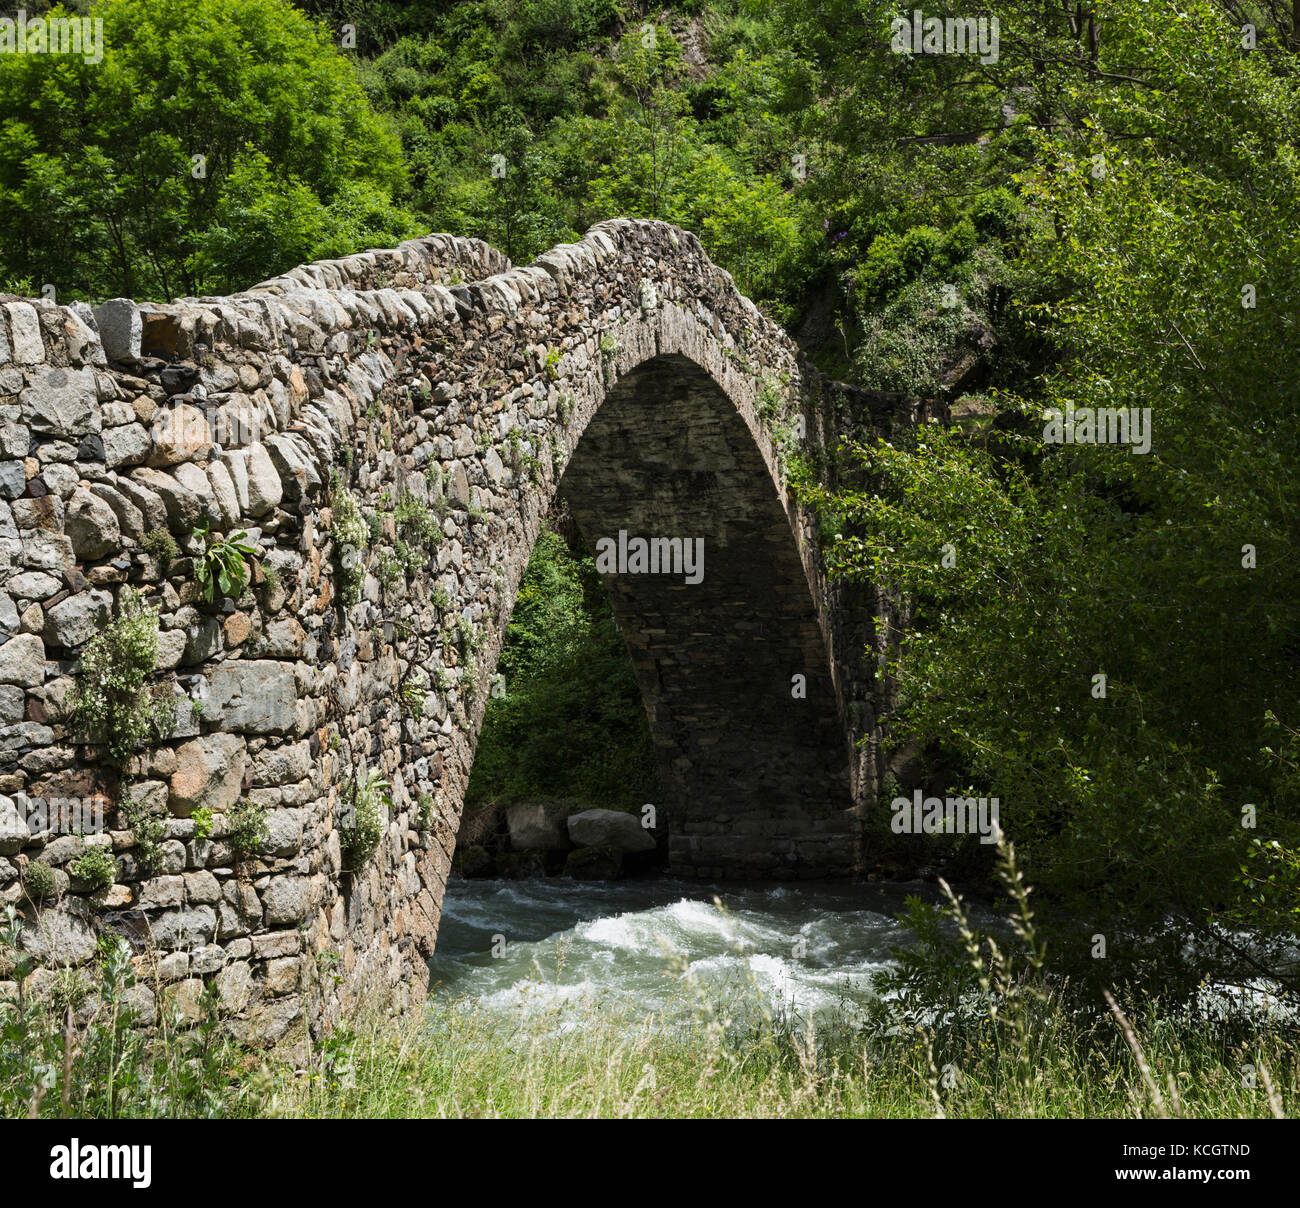 Principato di Andorra. pont de la margineda, o la margineda bridge a la margineda. L'unico arco hump-backed bridge risale al tardo medio Foto Stock